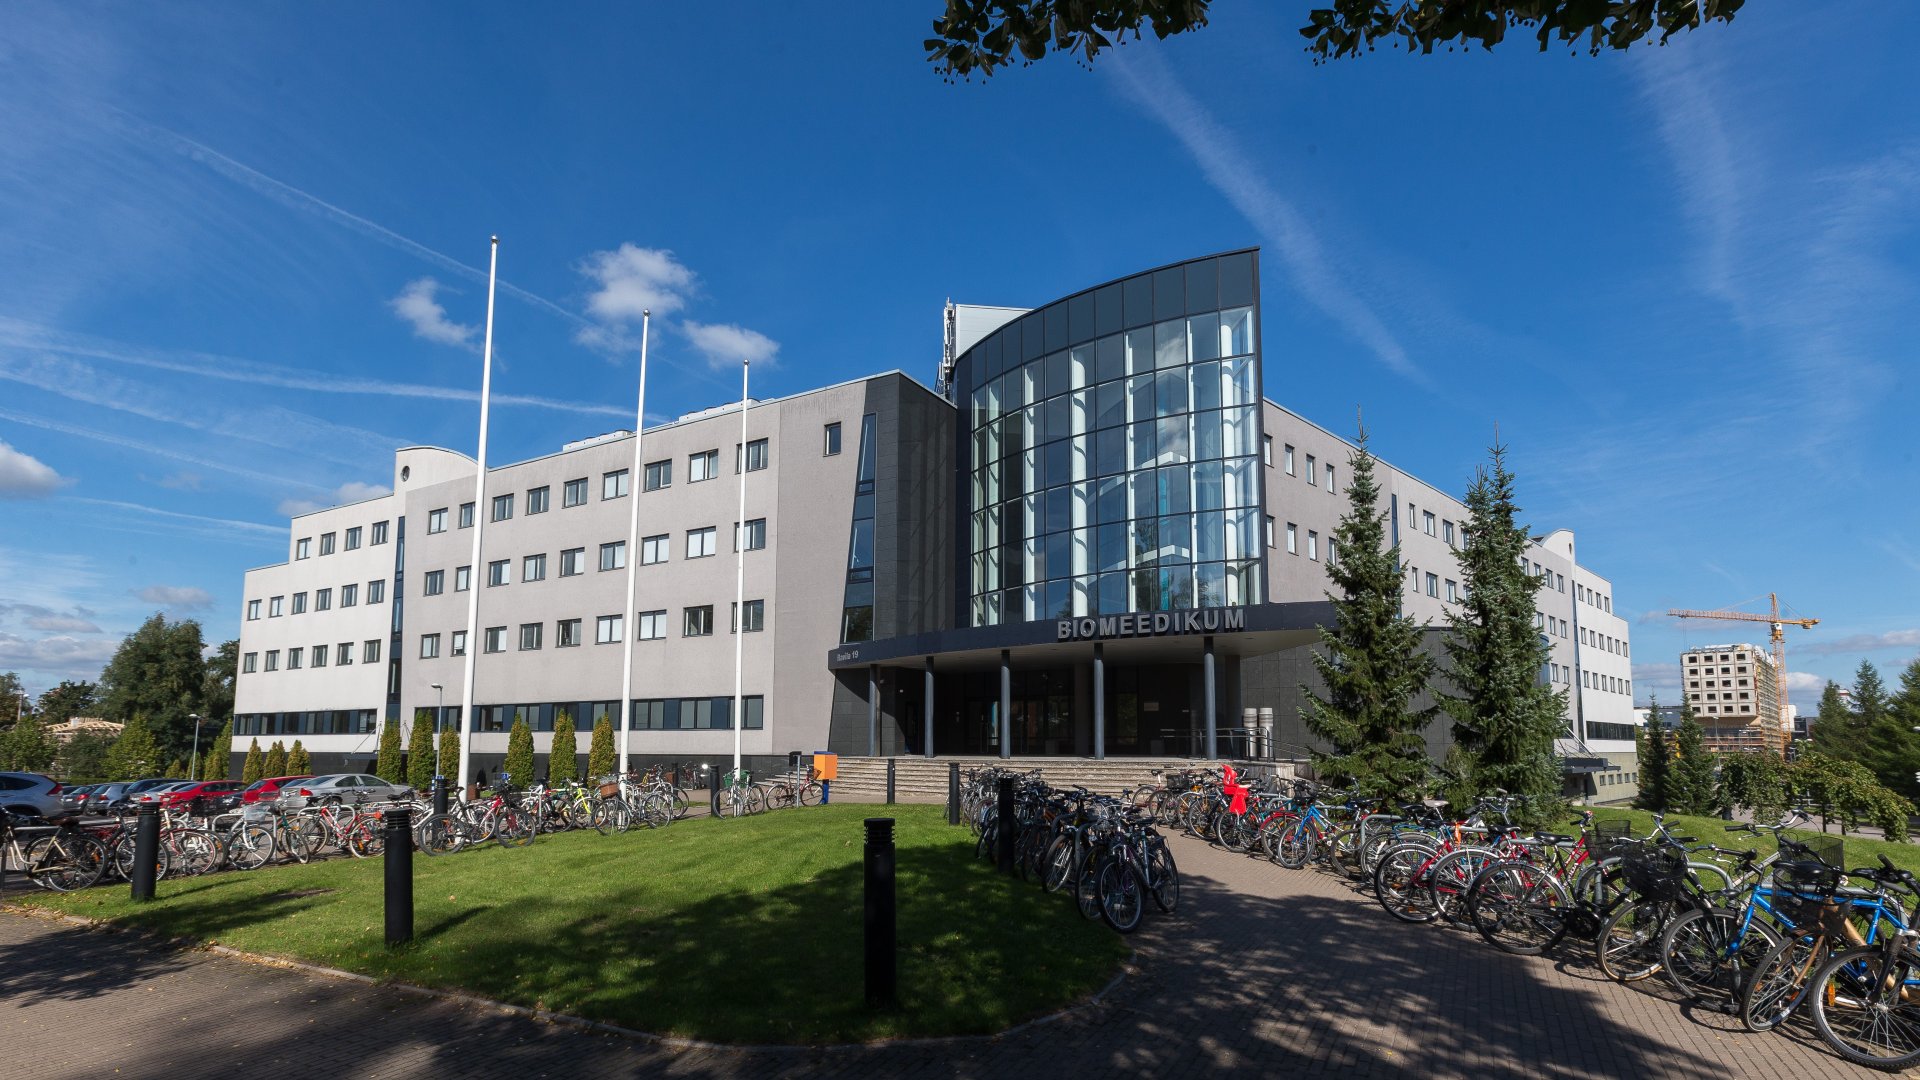 University of Tartu Faculty of Medicine study building Biomedicum